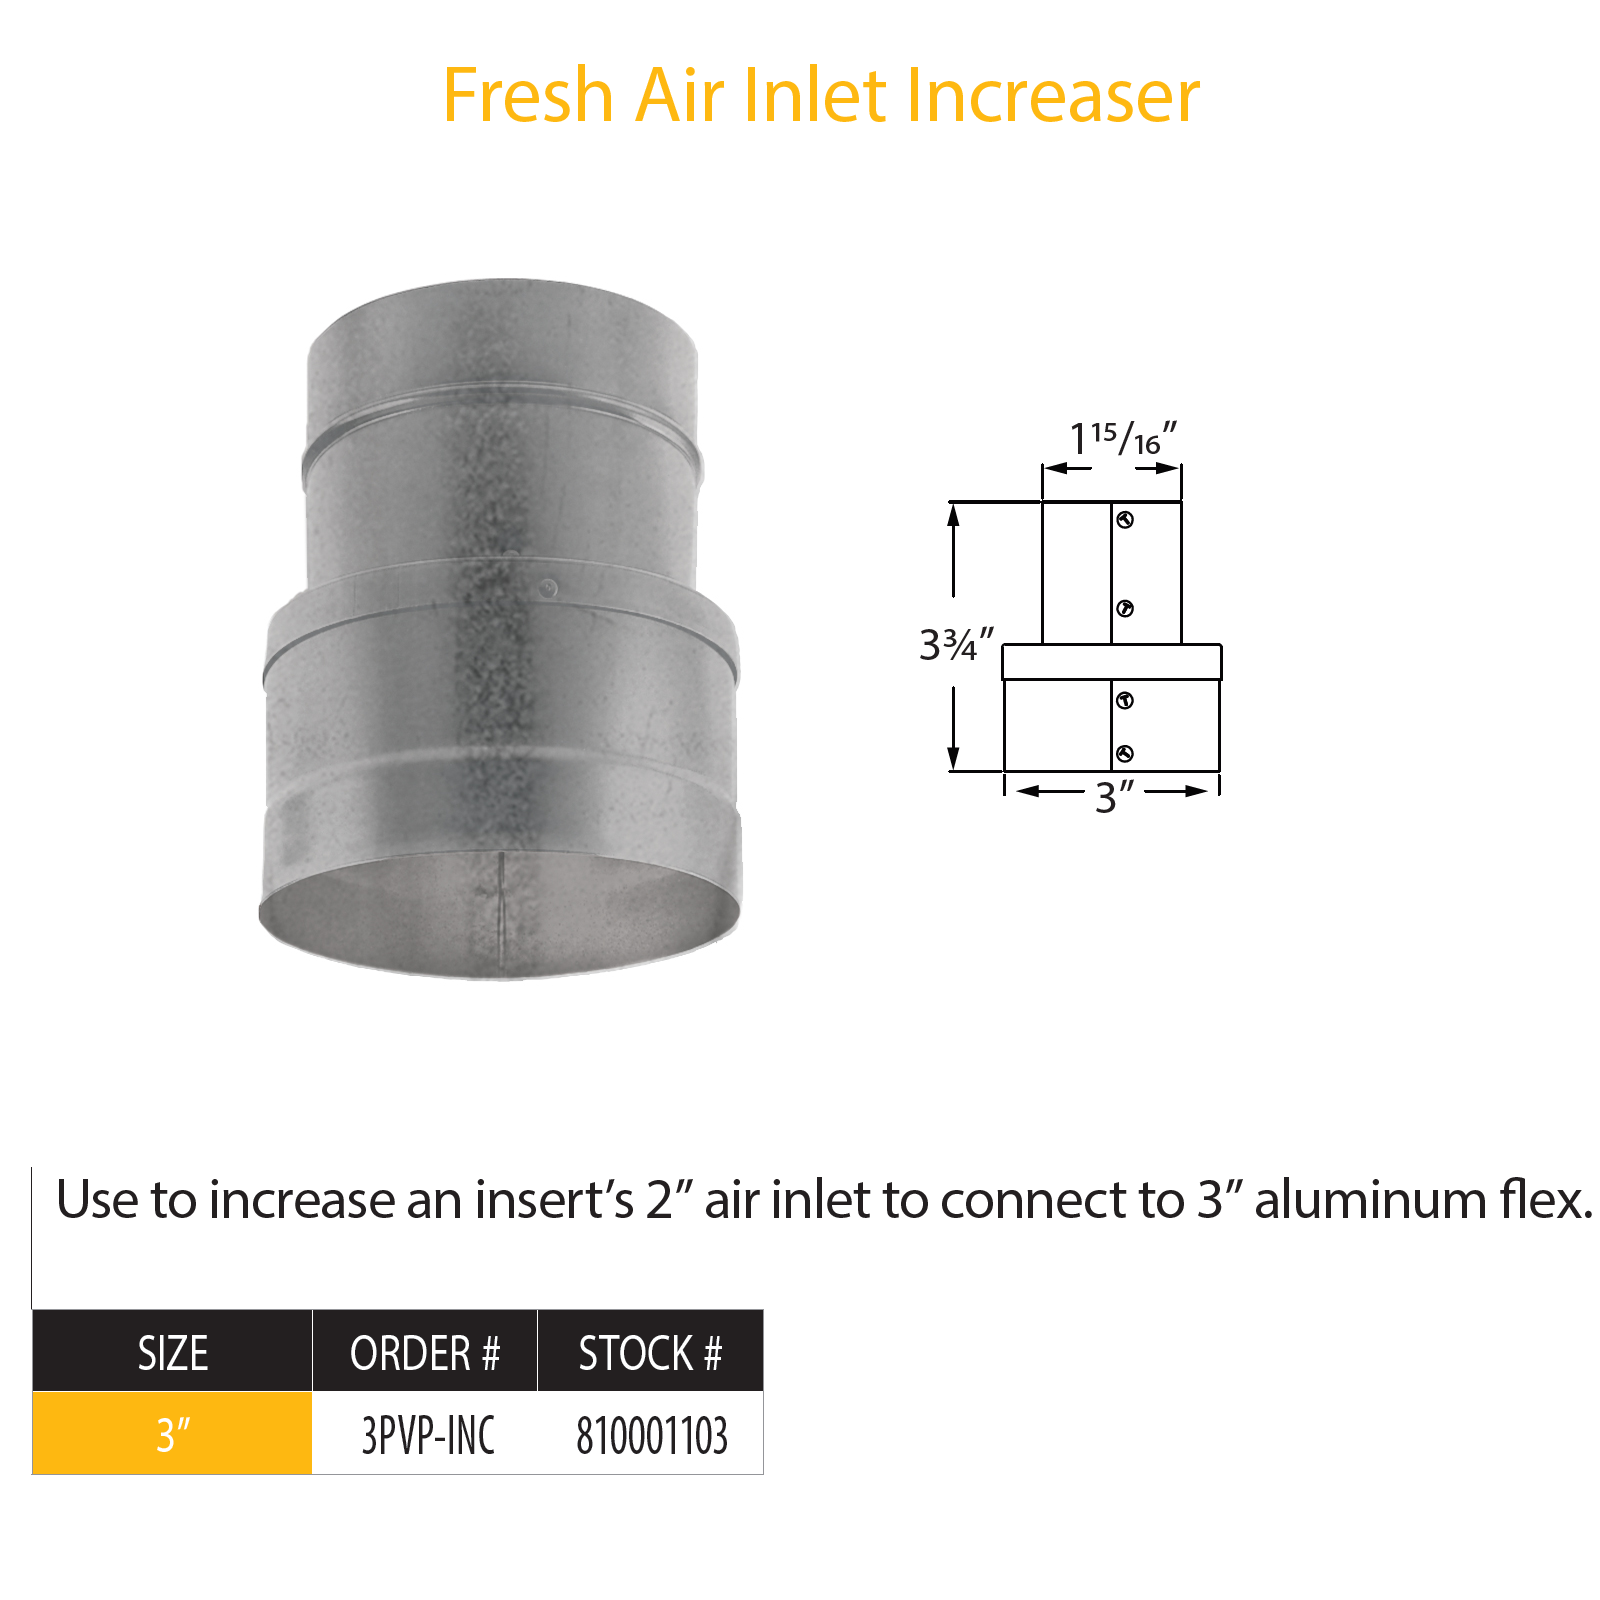 DuraVent PVP 2"-3" galvanized fresh air increaser | 3PVP-INC